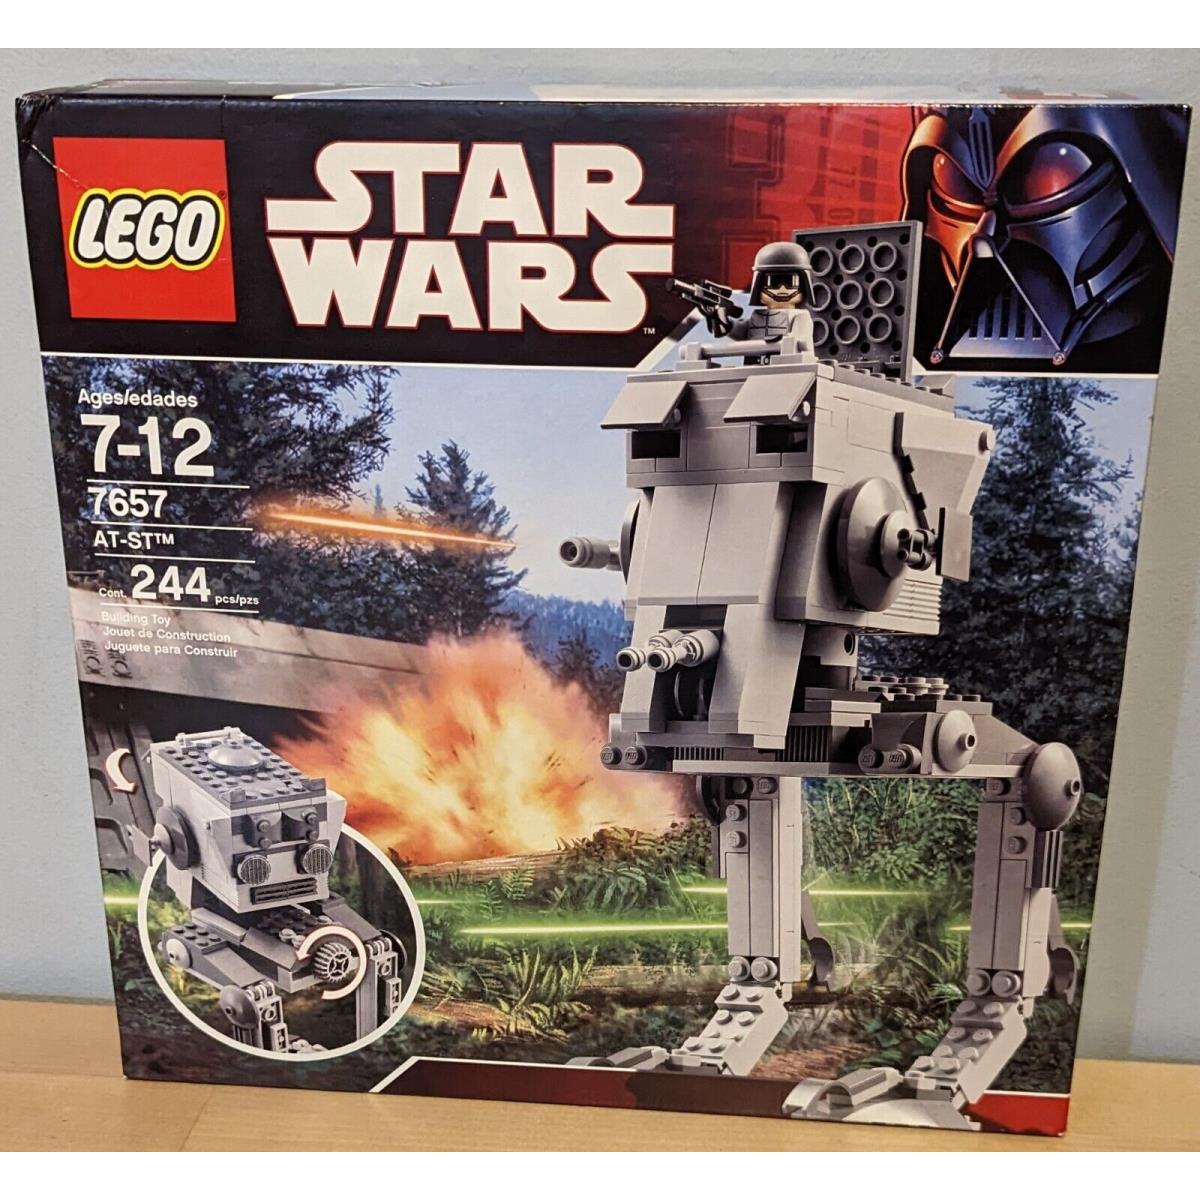 Damaged/new/sealed Lego 7657 Star Wars At-st 2007